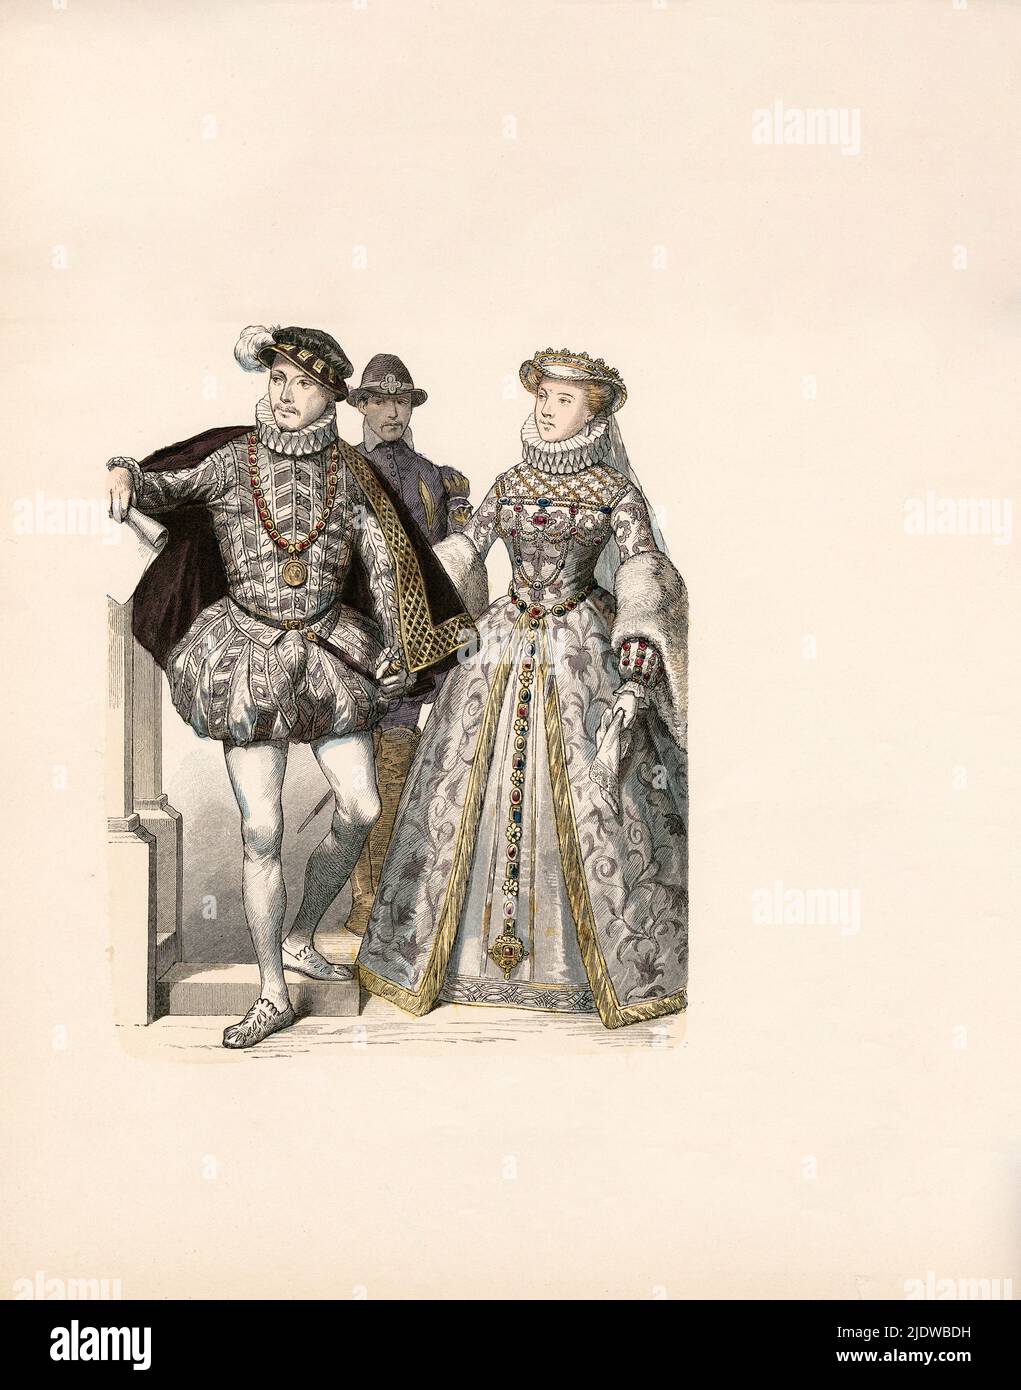 Charles IX of France (1550-1574), Eleonora (1554-1592), France, 16th Century, Illustration, The History of Costume, Braun & Schneider, Munich, Germany, 1861-1880 Stock Photo